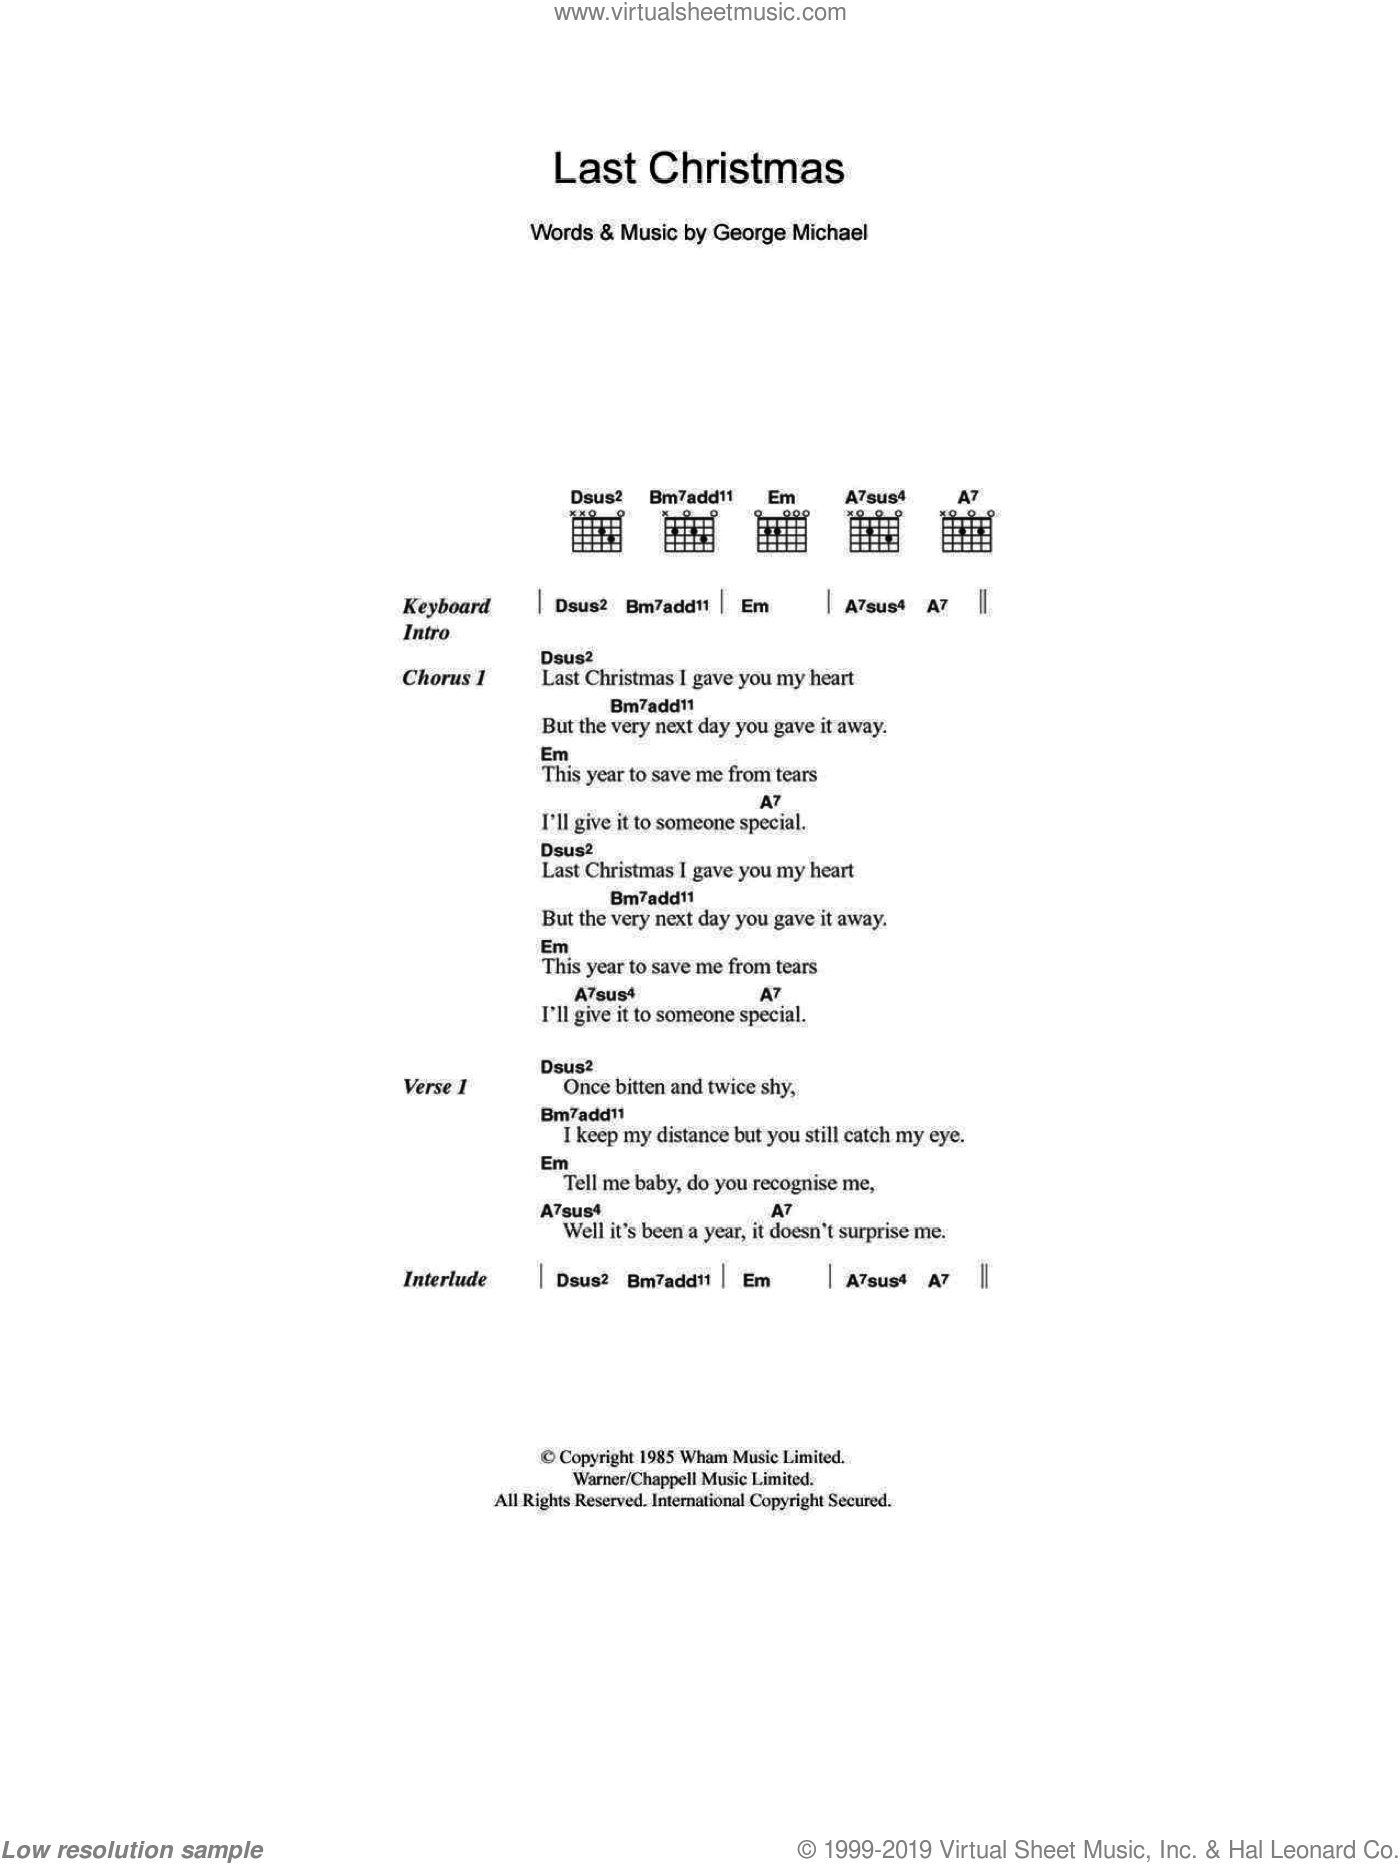 Wham! - Last Christmas sheet music for guitar (chords) [PDF]